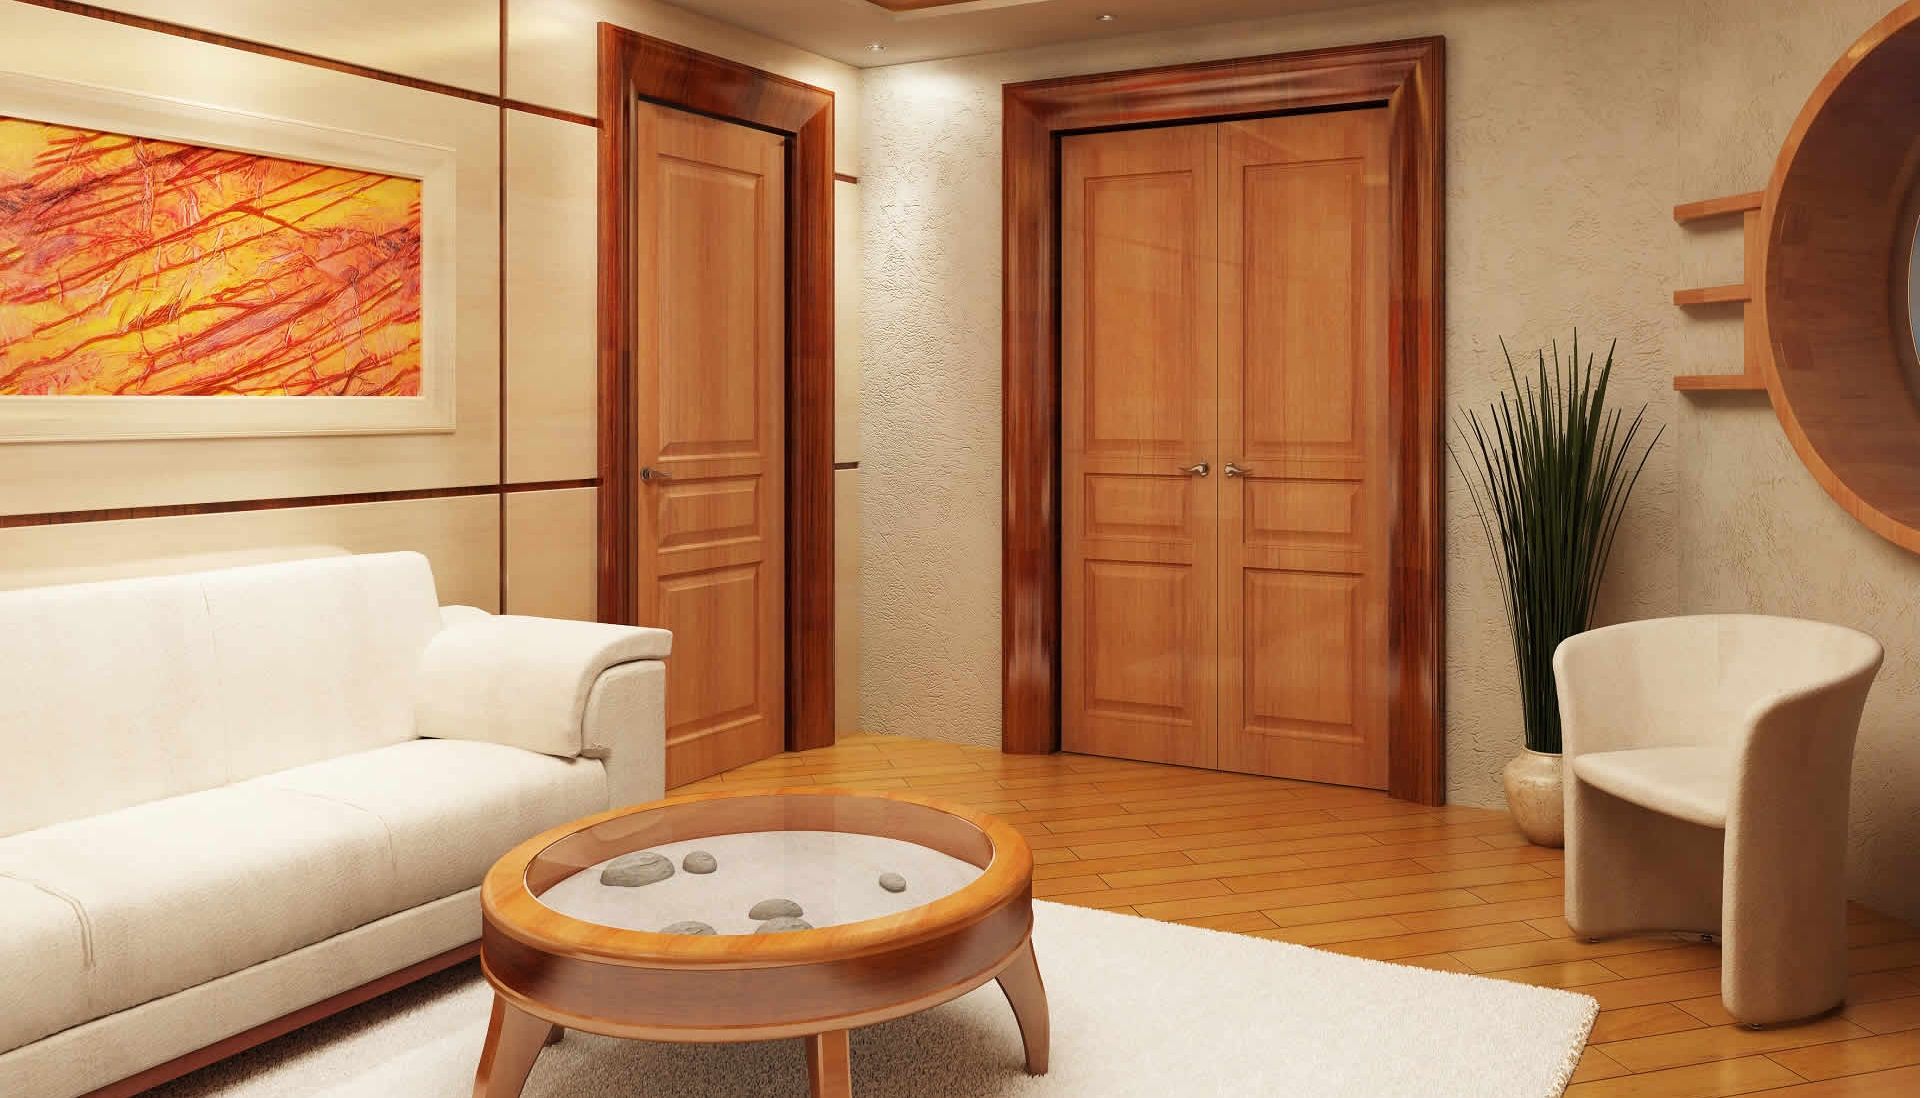 Дизайн комнаты двери венге